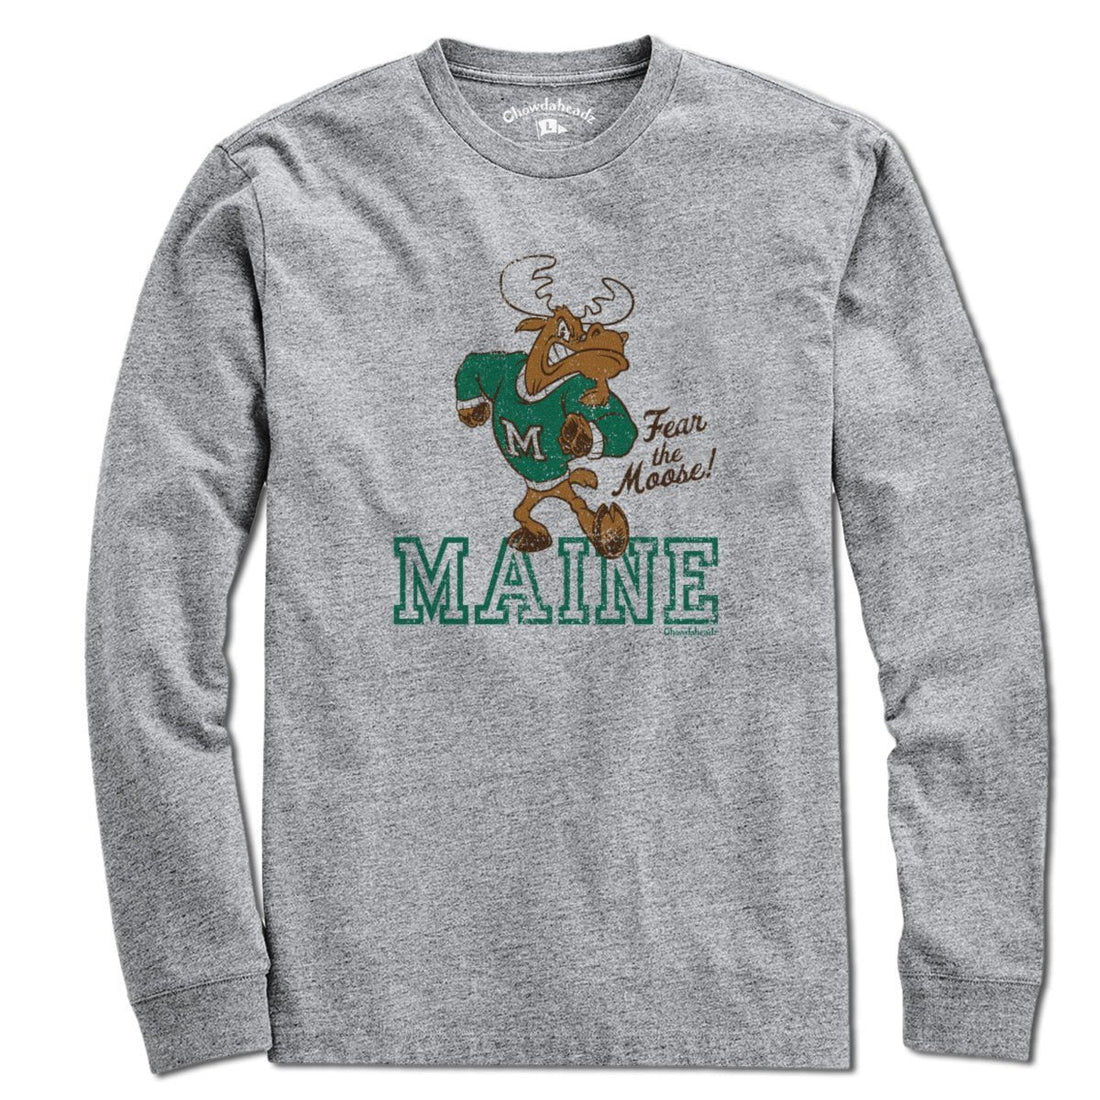 Fear The Moose Maine Mascot T-shirt - Chowdaheadz